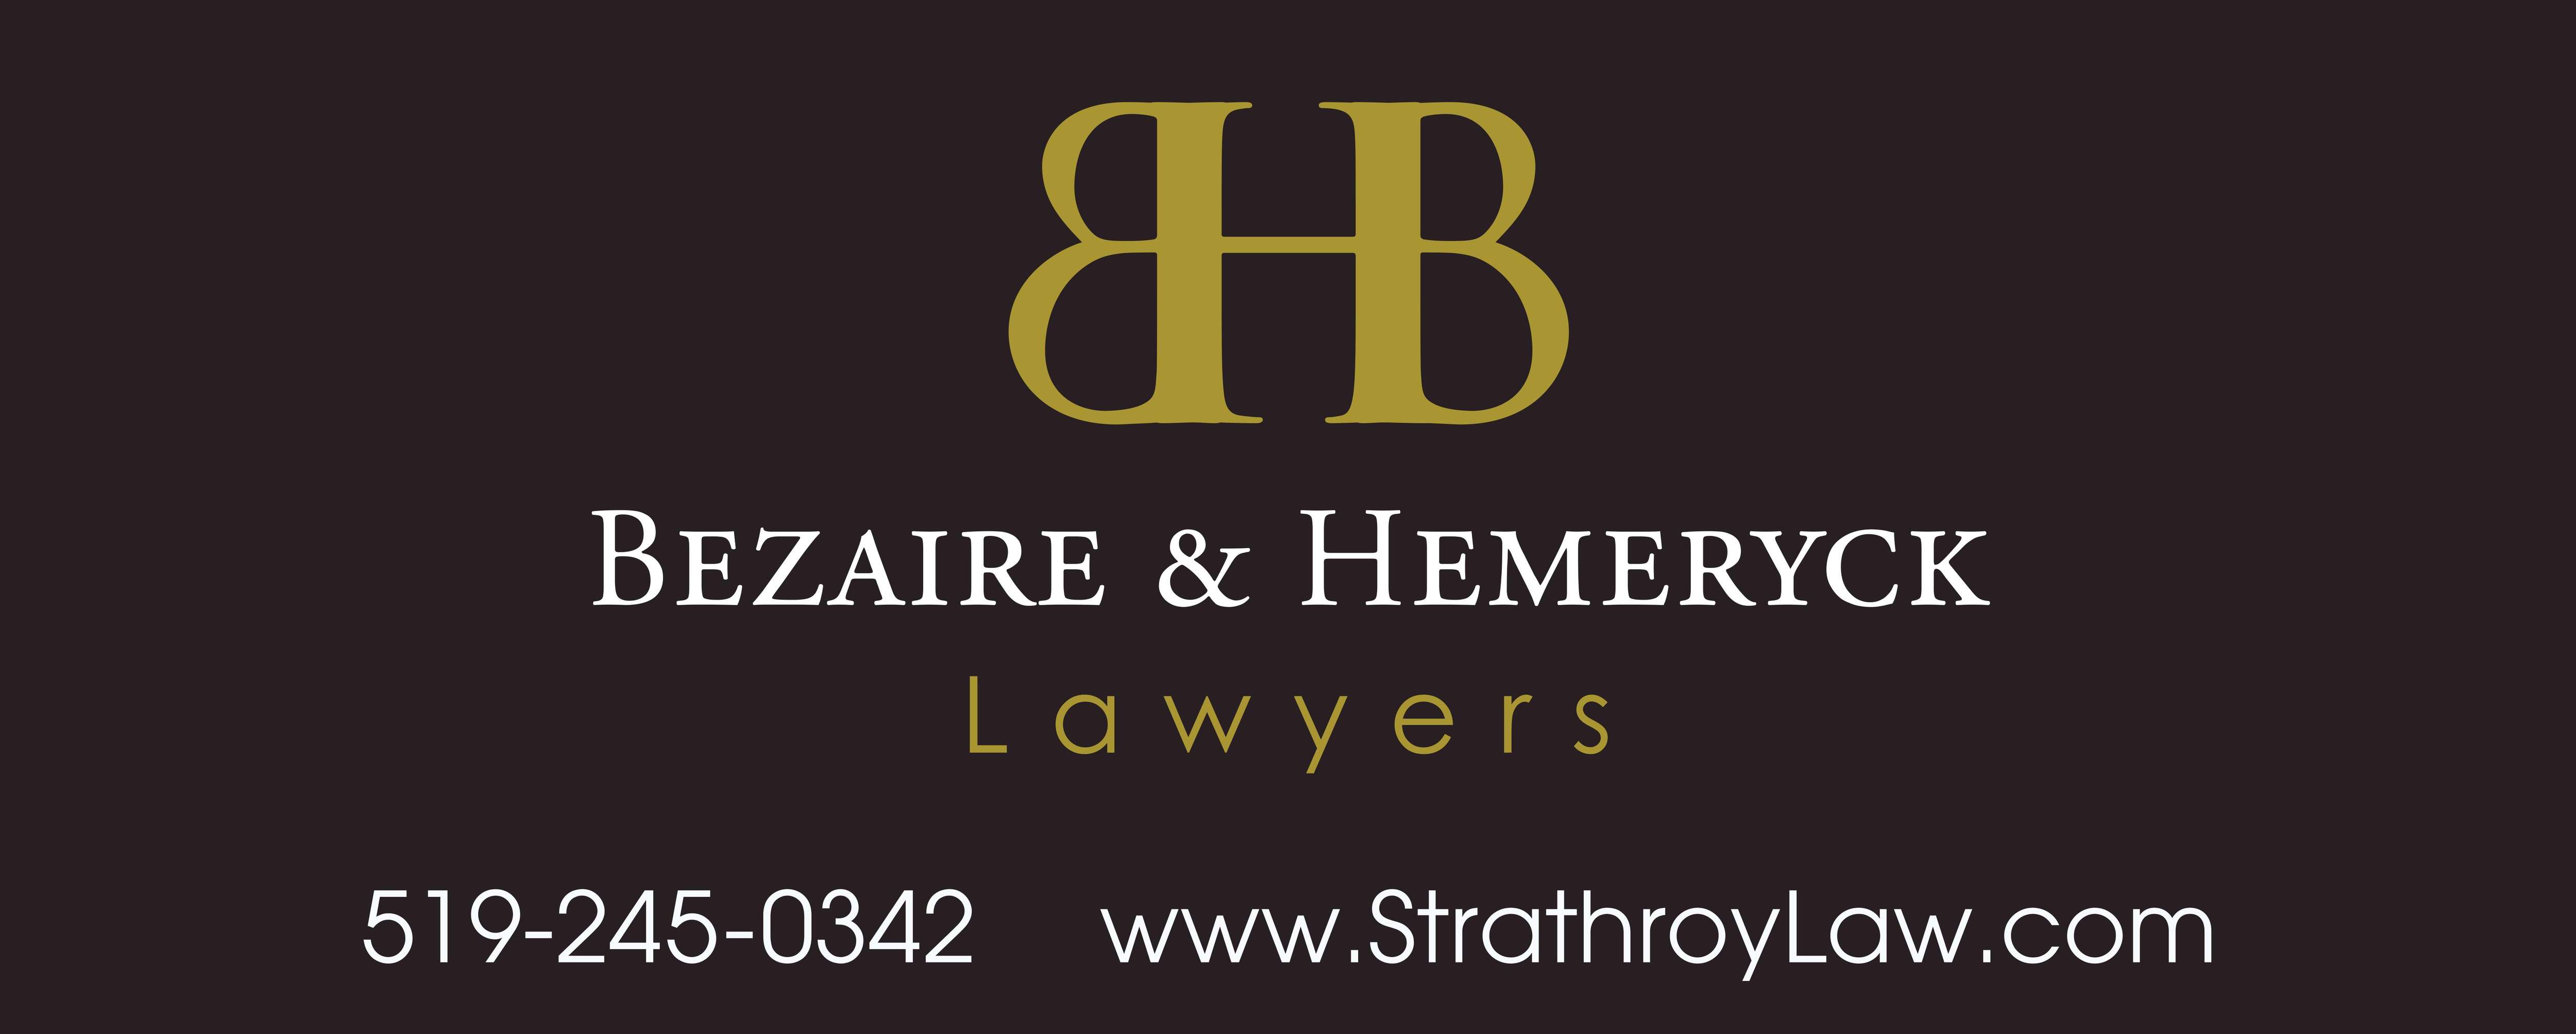 Bezaire & Hemeryck Lawyers